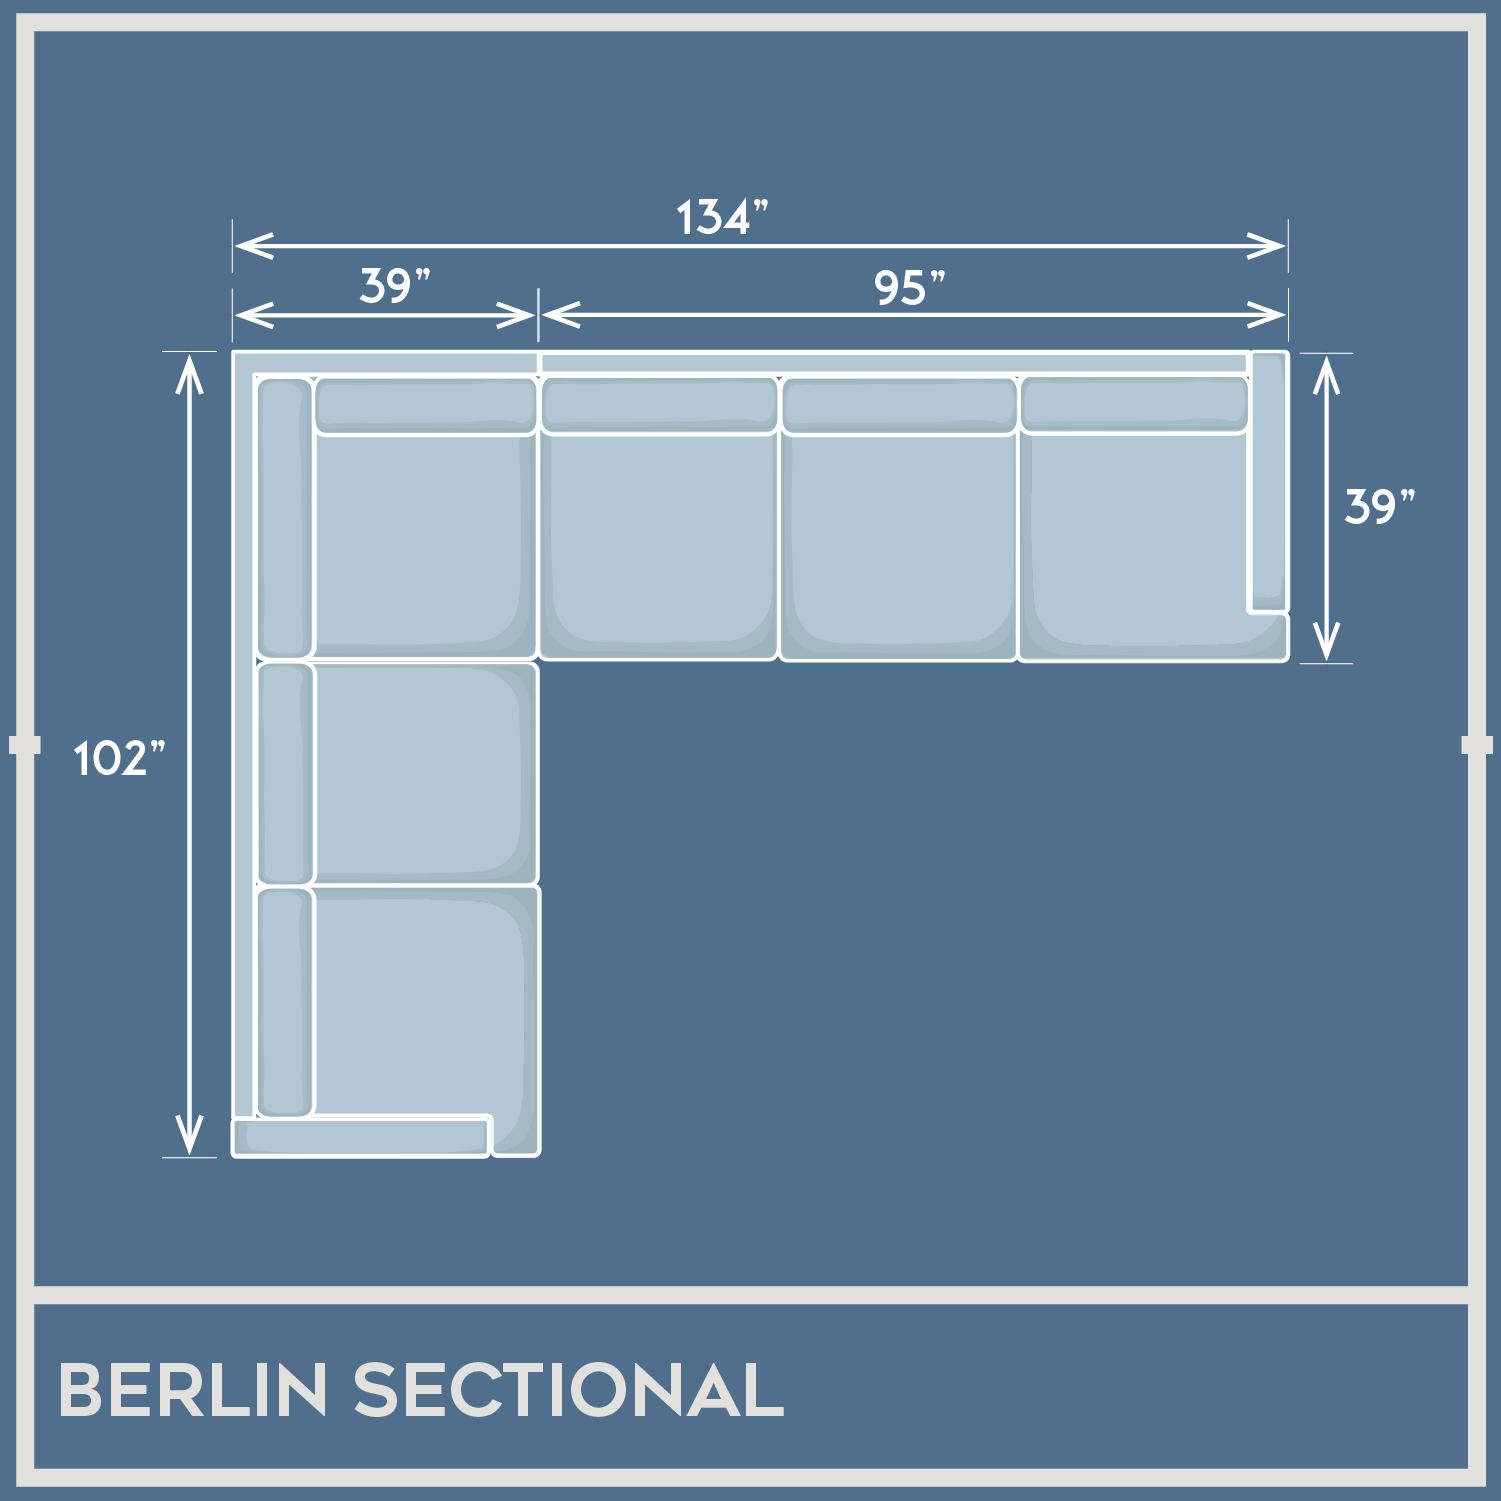 Addington Co Berlin Vegan Leather Left Facing Sectional Sofa for Living Room, L-Shape, Ash Grey, 6-Seats